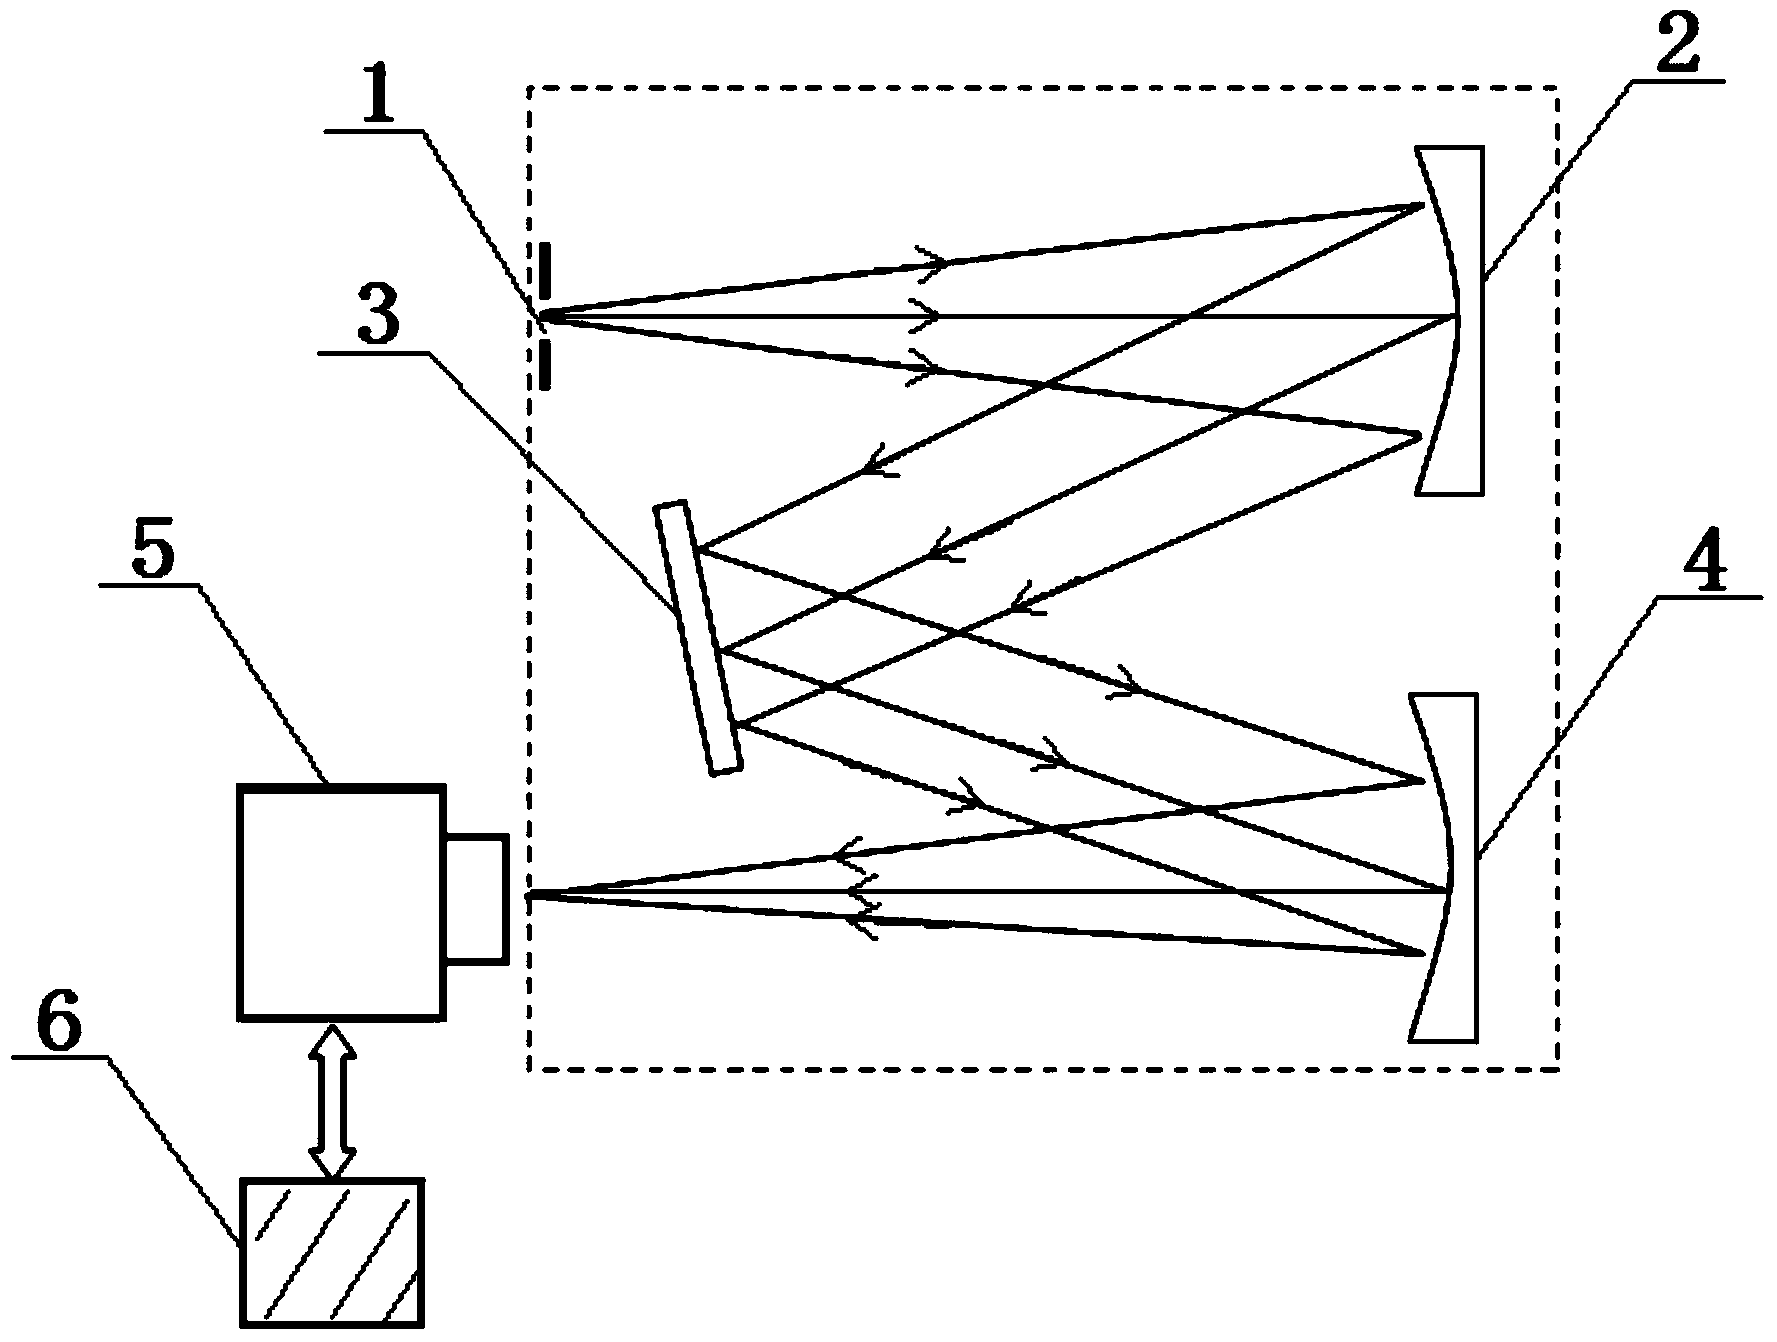 Super-resolution spectrograph based on multiple slit arrays